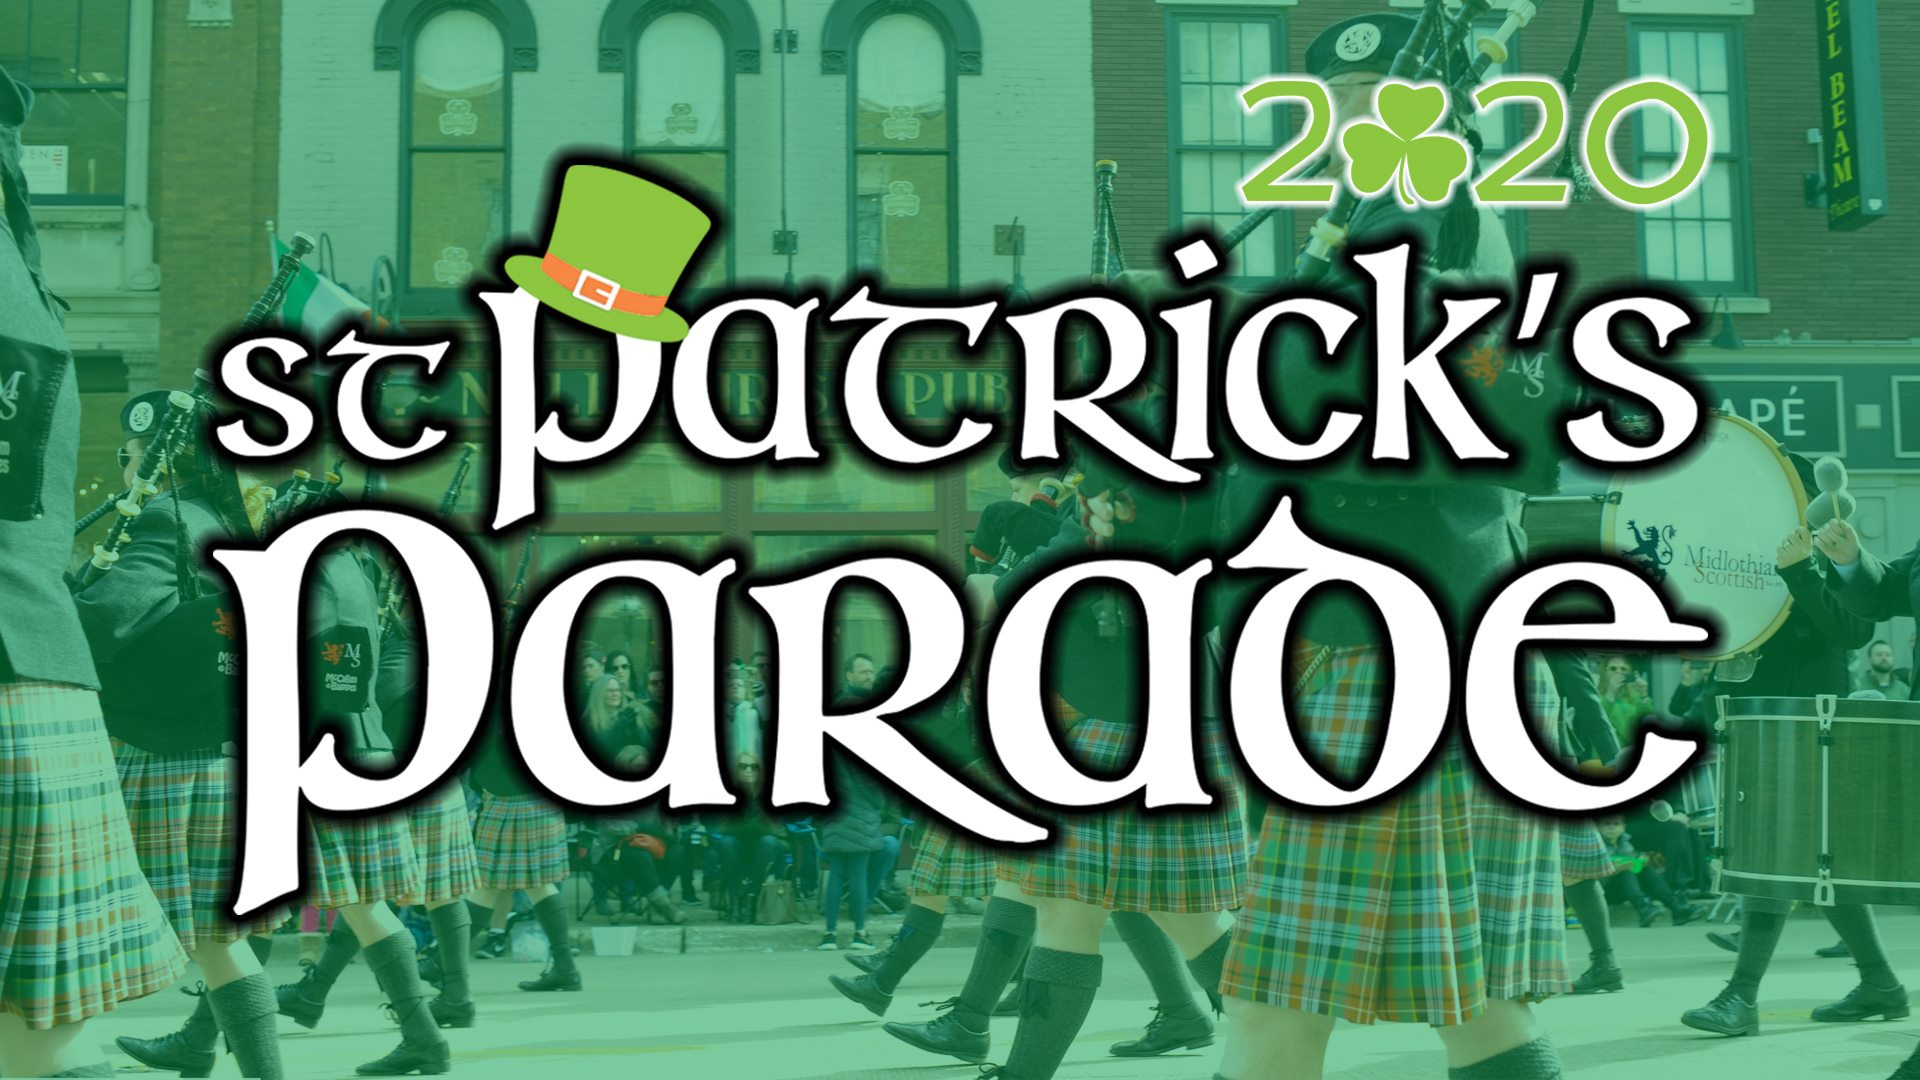 St. Charles St. Patrick's Parade 2020